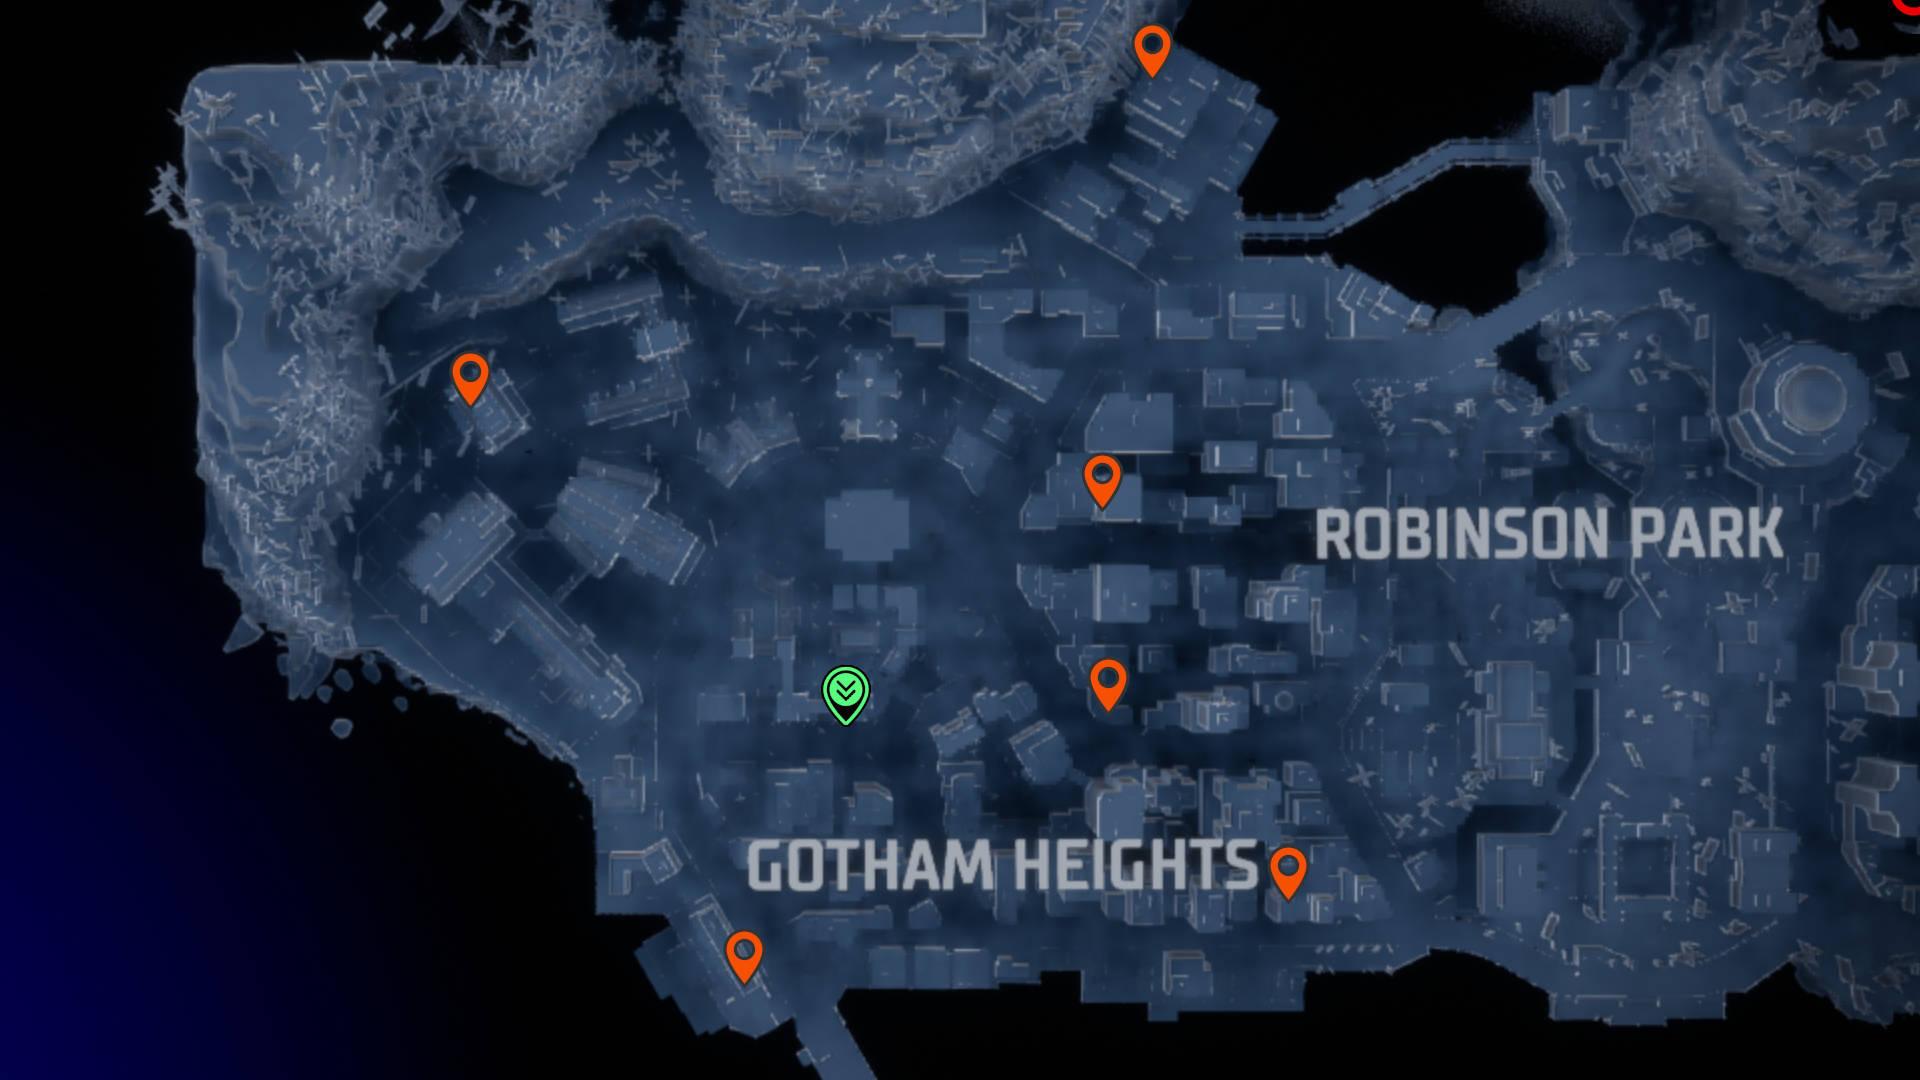 Gotham Knights - All Batarangs Locations [Batarang Collector Trophy] 